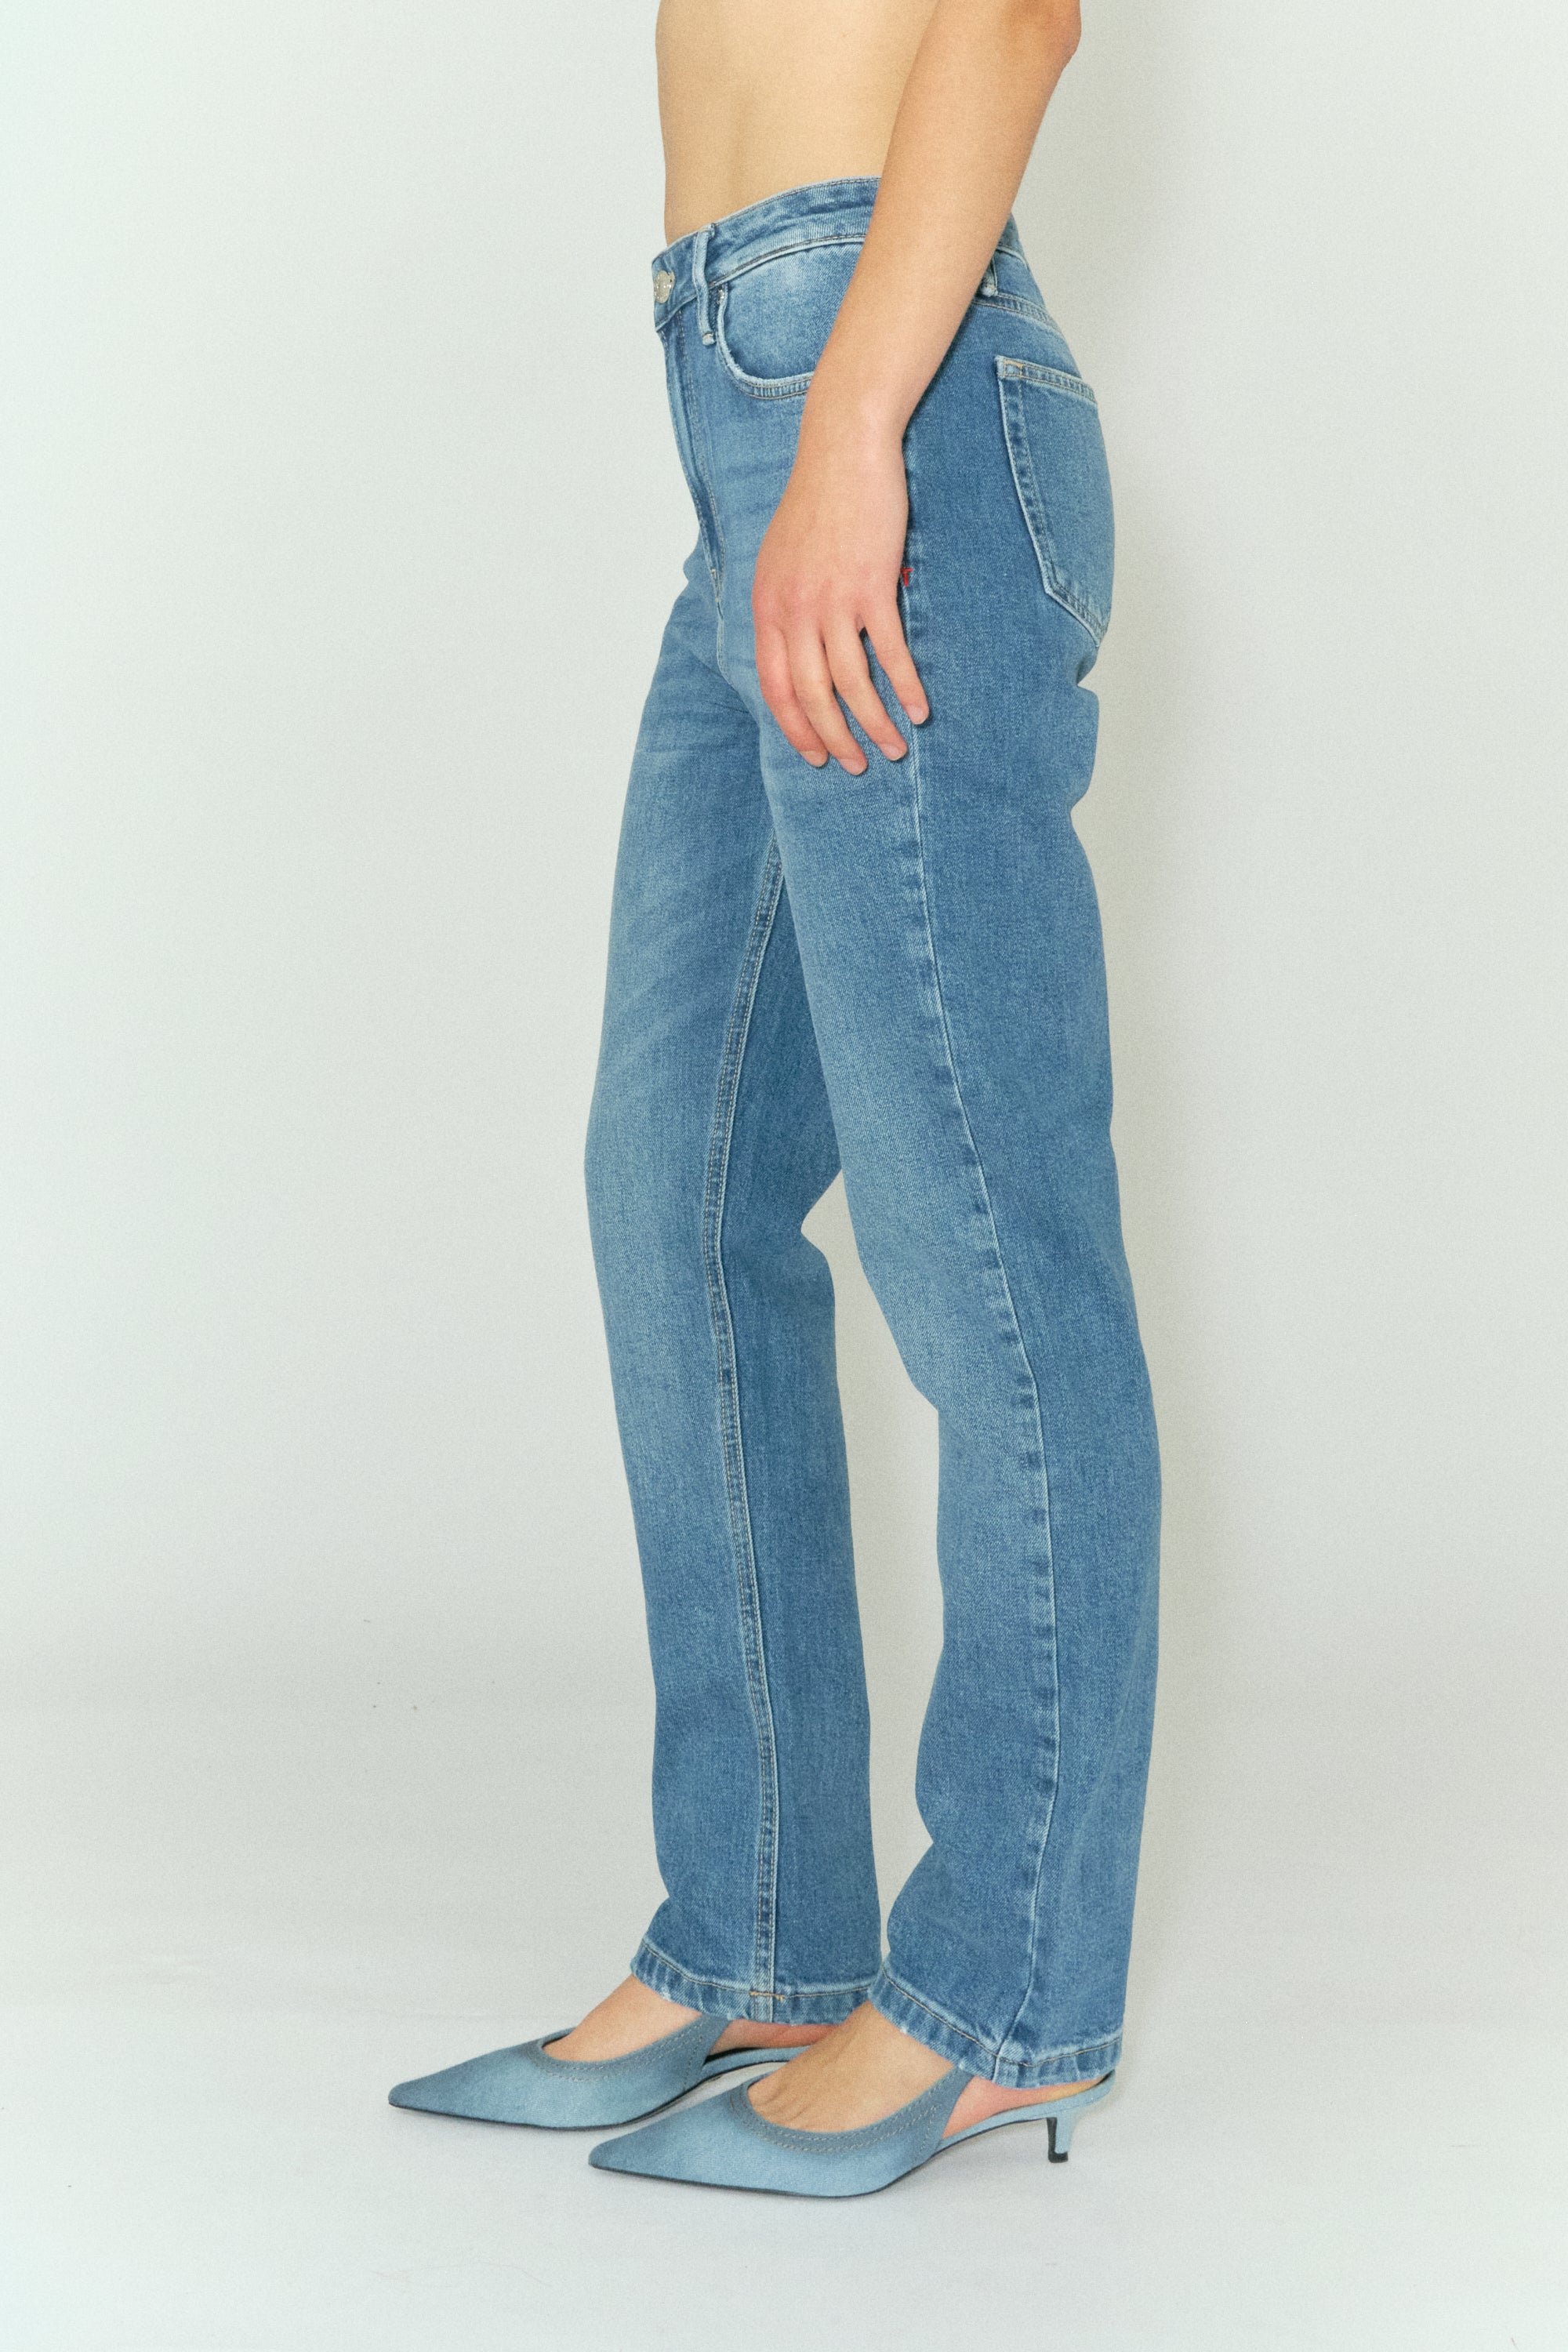 Tomorrow TMRW Teresa Jeans - Hong Kong Jeans & Pants 51 Denim Blue